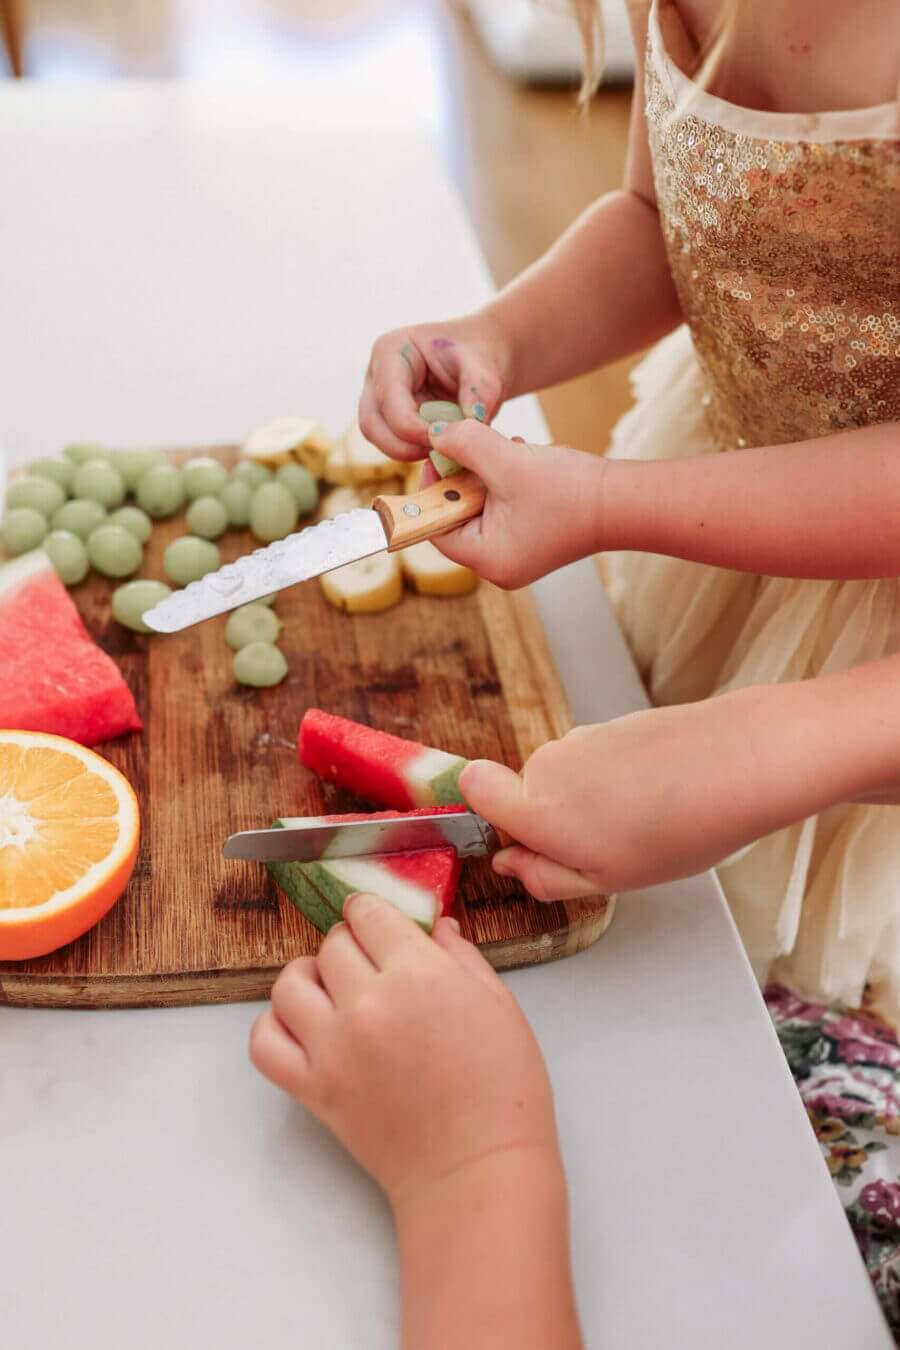 KiddiKutter Wooden Knife - Safe Chopping for Kids - Cooking